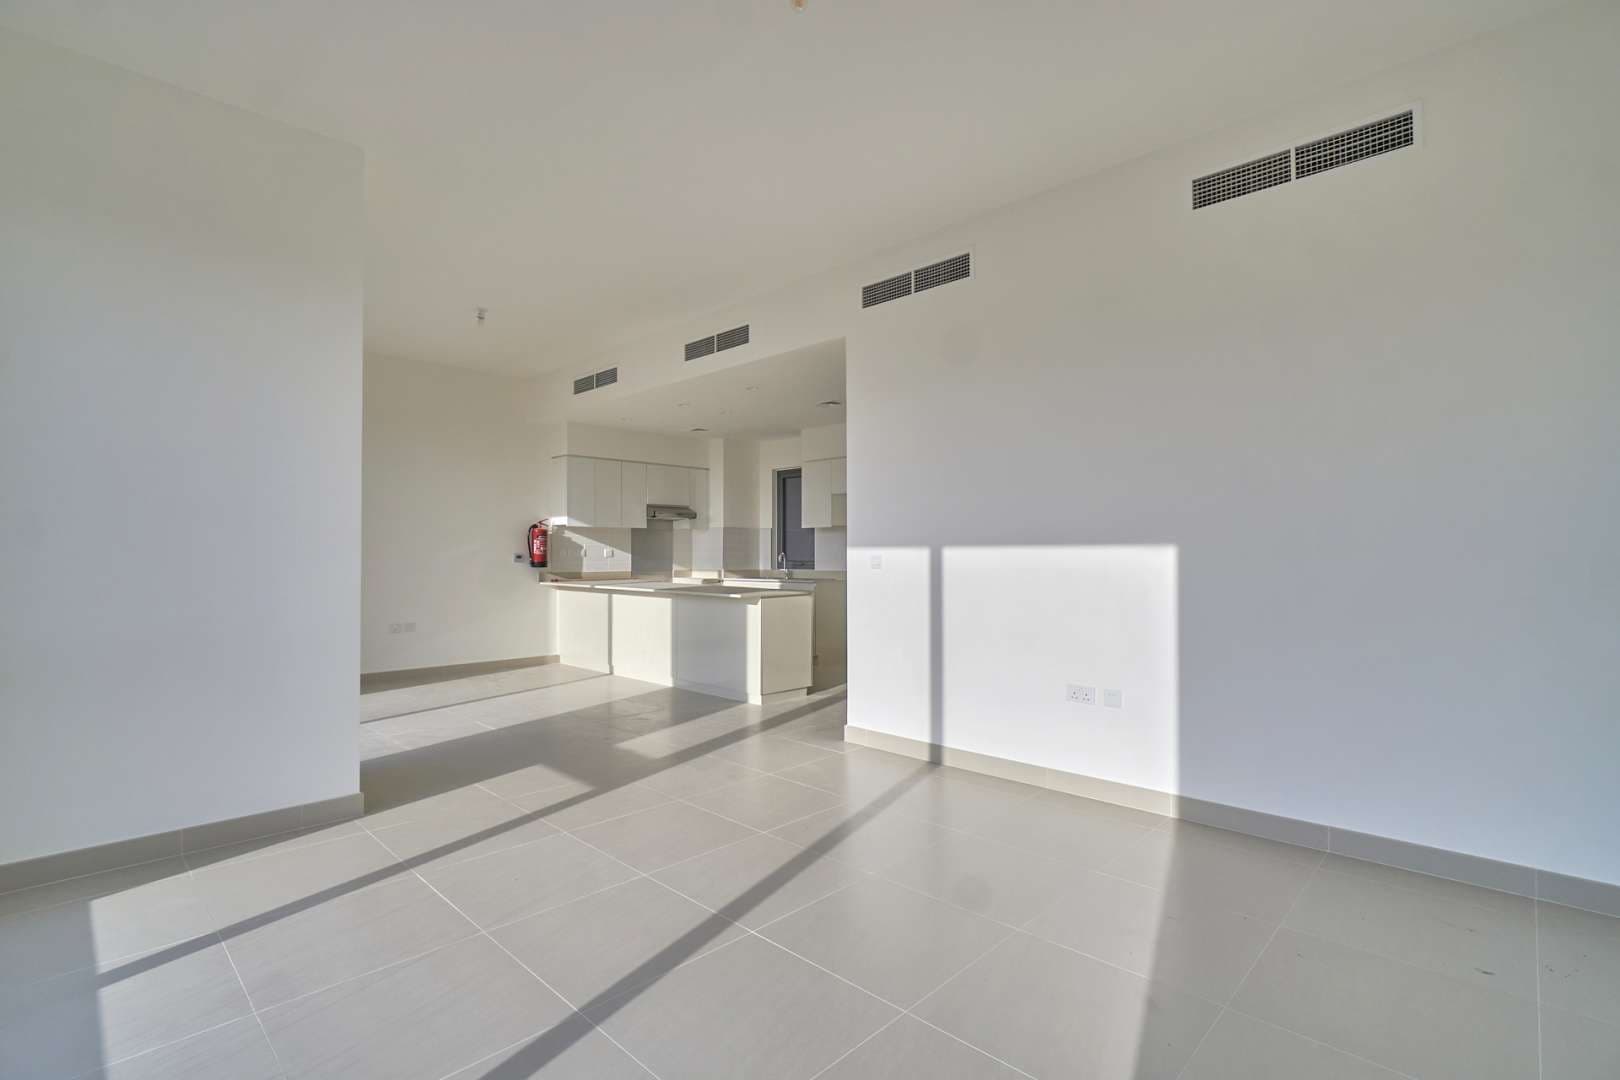 4 Bedroom Villa For Sale Maple At Dubai Hills Estate Lp10339 256c5f79d26f2a00.jpg